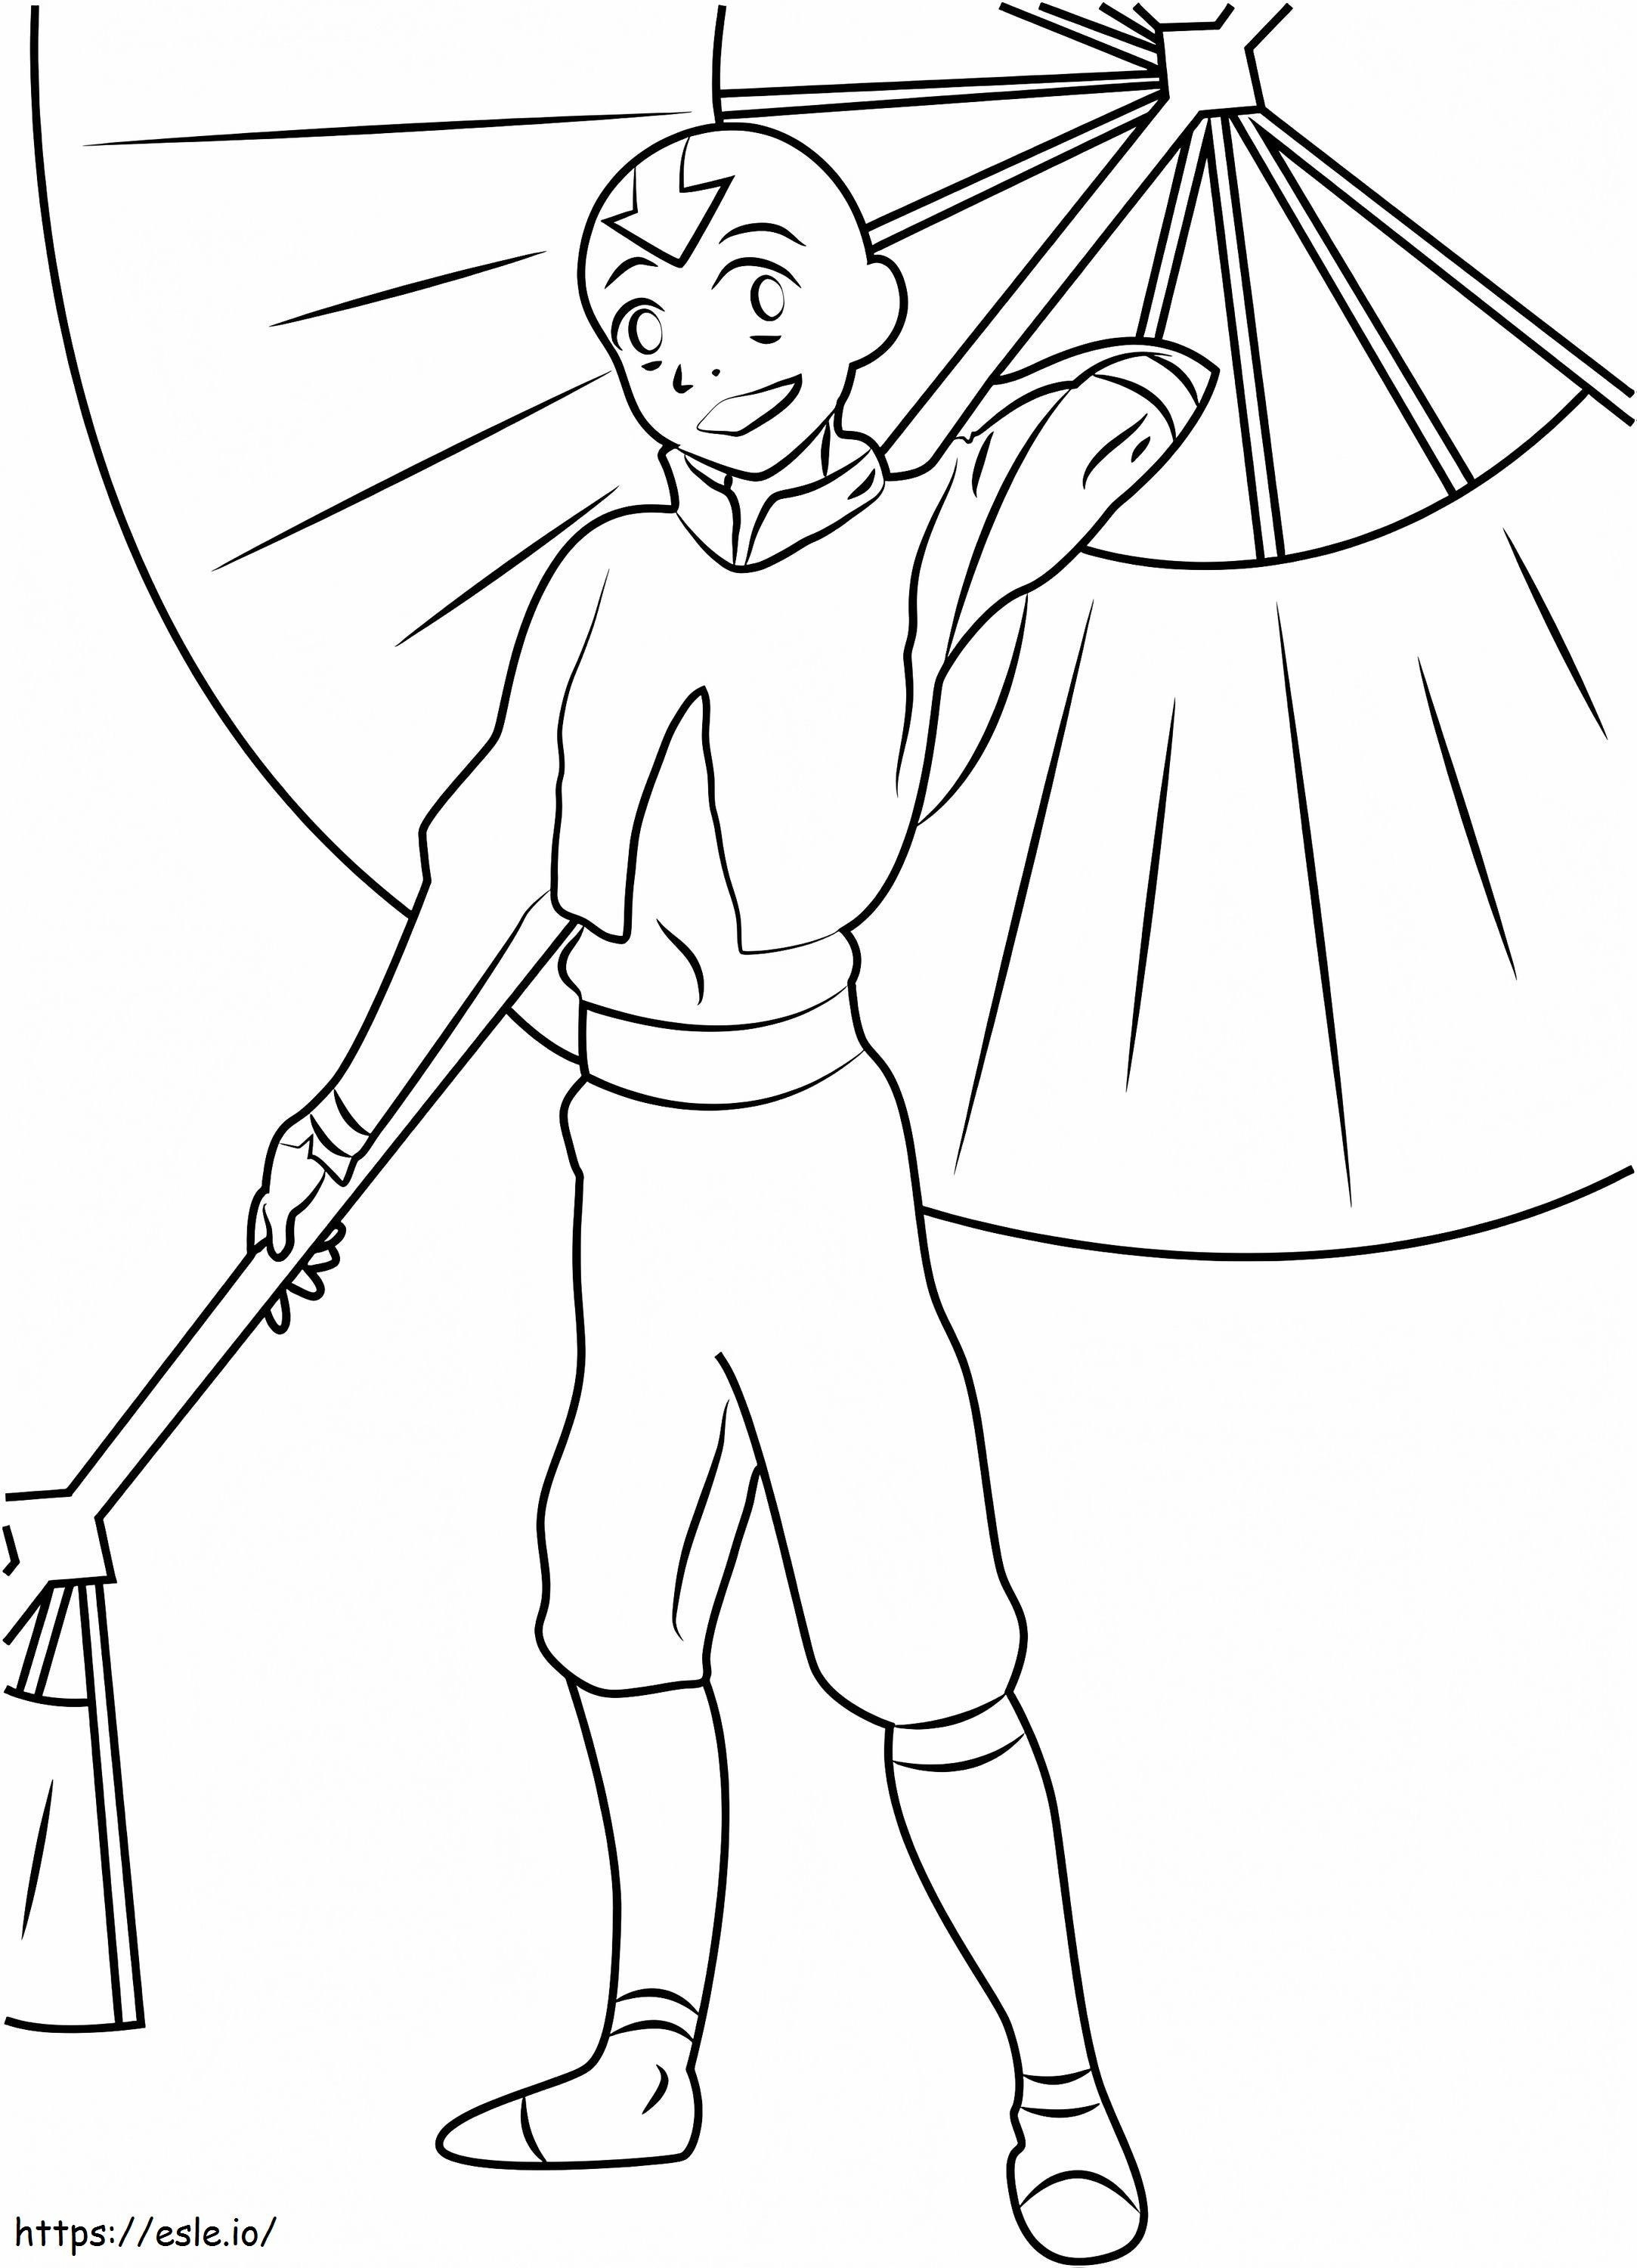 1532491257 Feliz Aang com guarda-chuva A4 para colorir